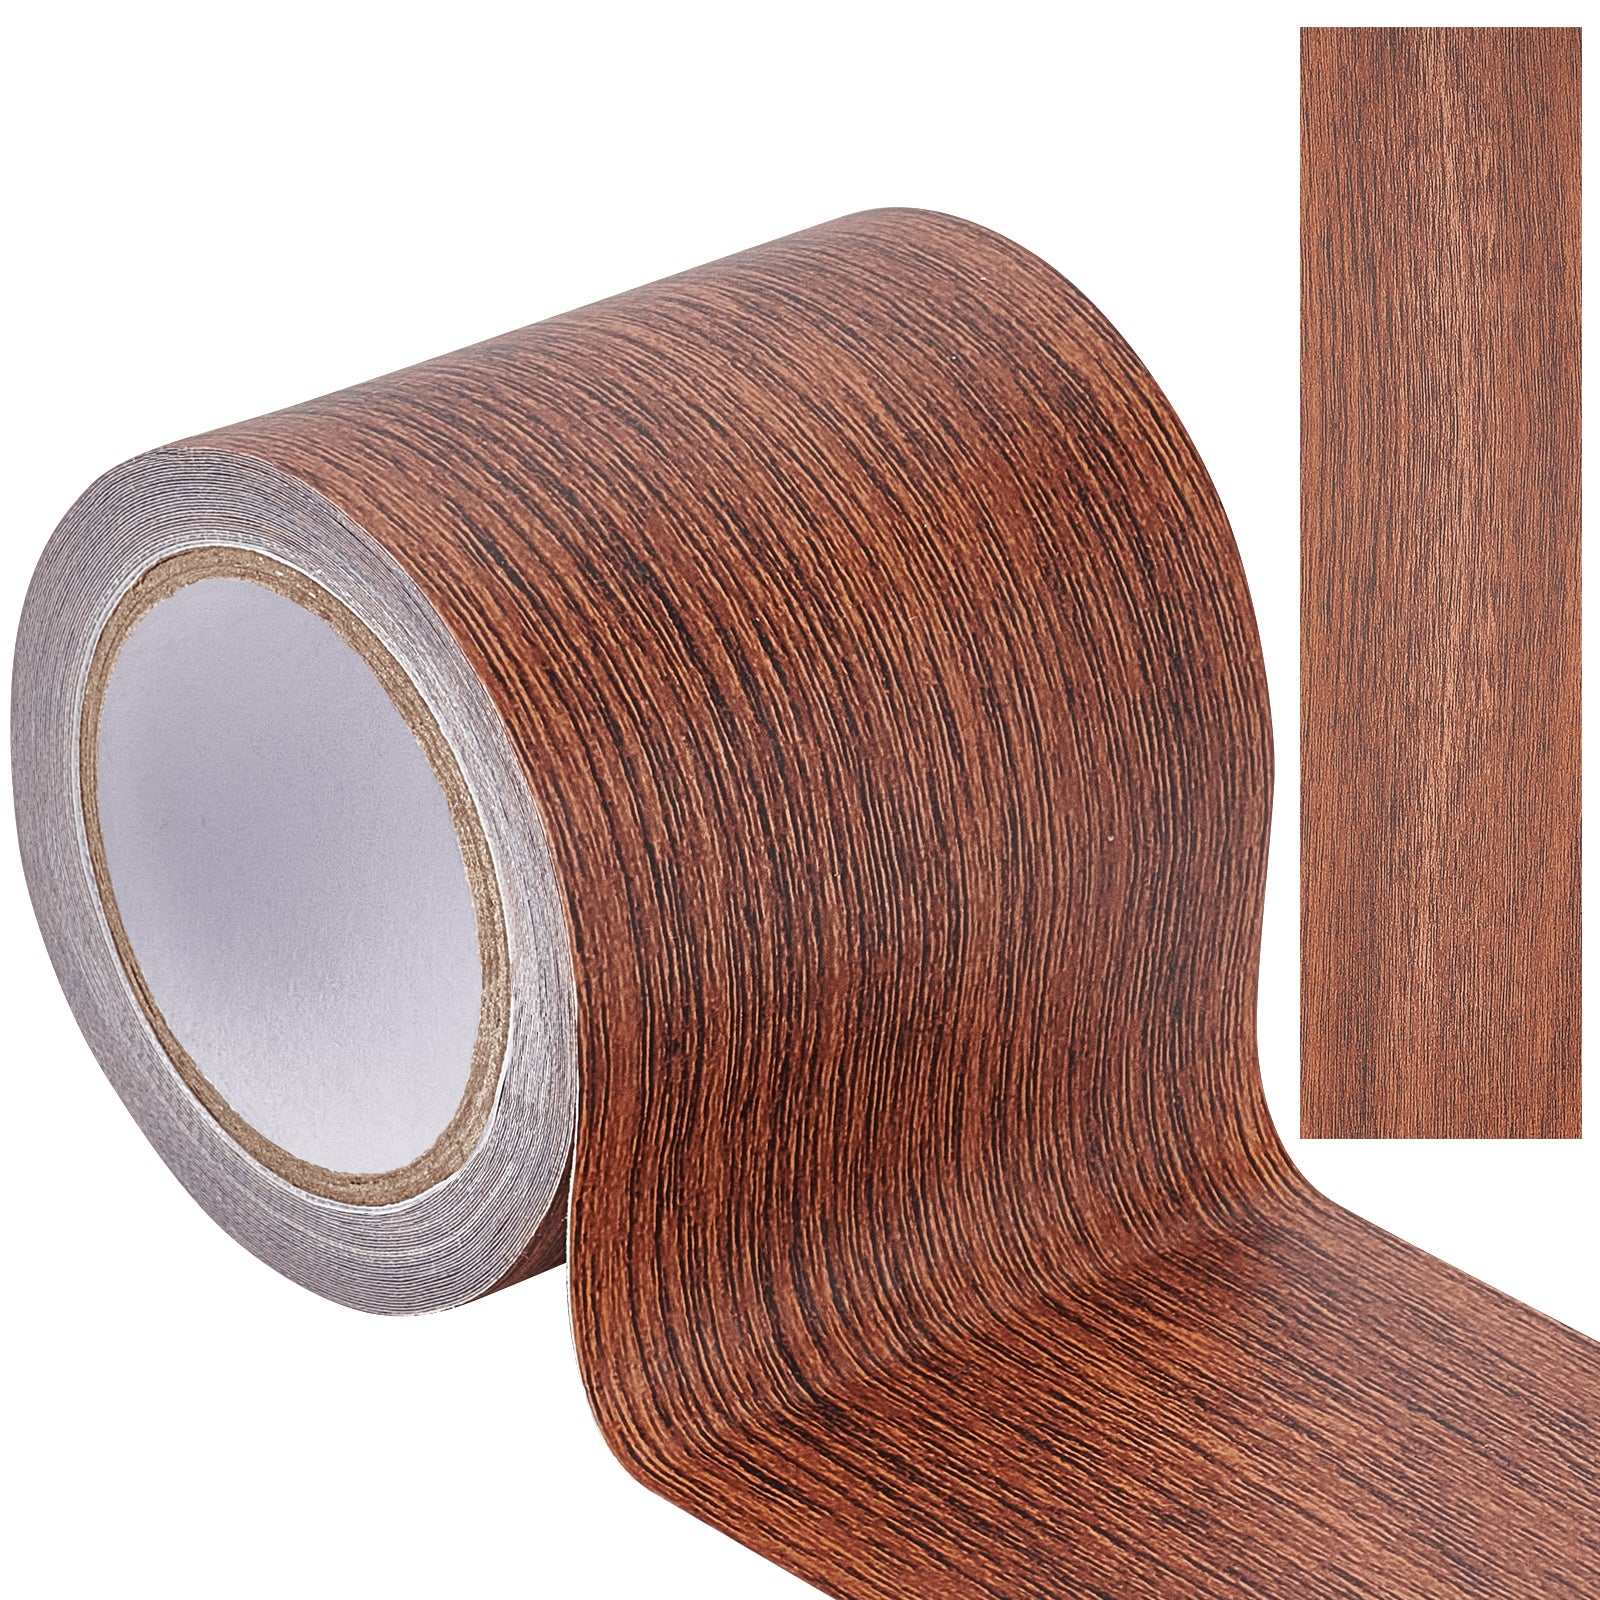 Globleland Non-woven Fabrics Imitation Wood Grain Adhesive Tape, Oakwood Grain Repair Tape Patch, Flat, Coconut Brown, 57mm, about 4.57m/roll